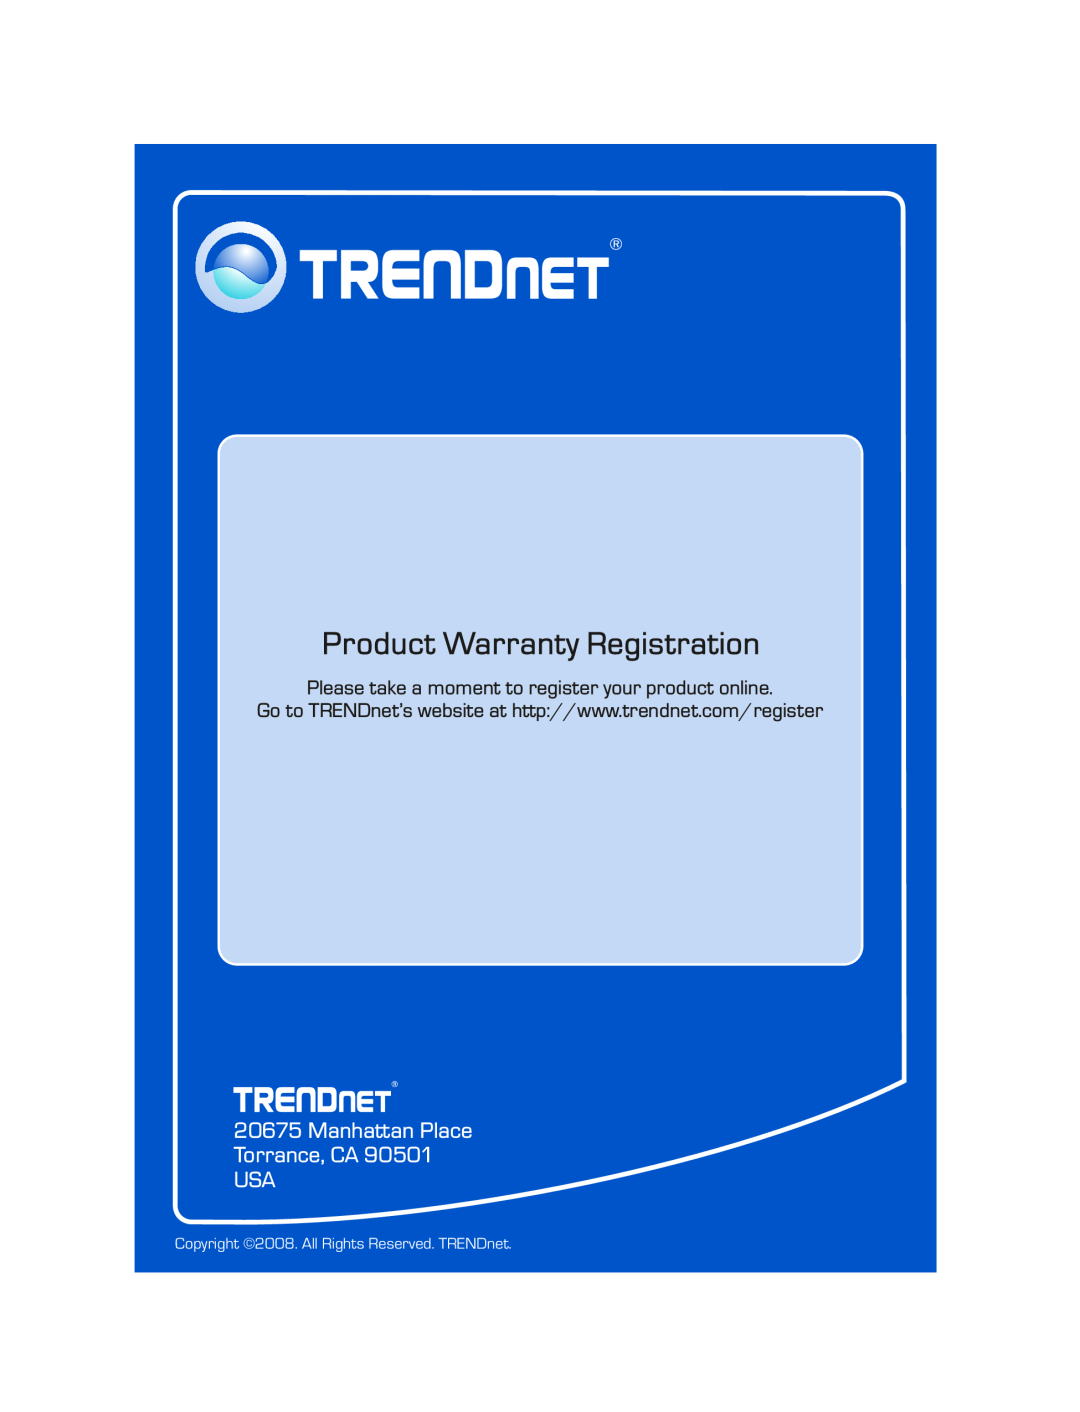 TRENDnet Wireless N Router Internet manual Product Warranty Registration, Manhattan Place Torrance, CA USA 